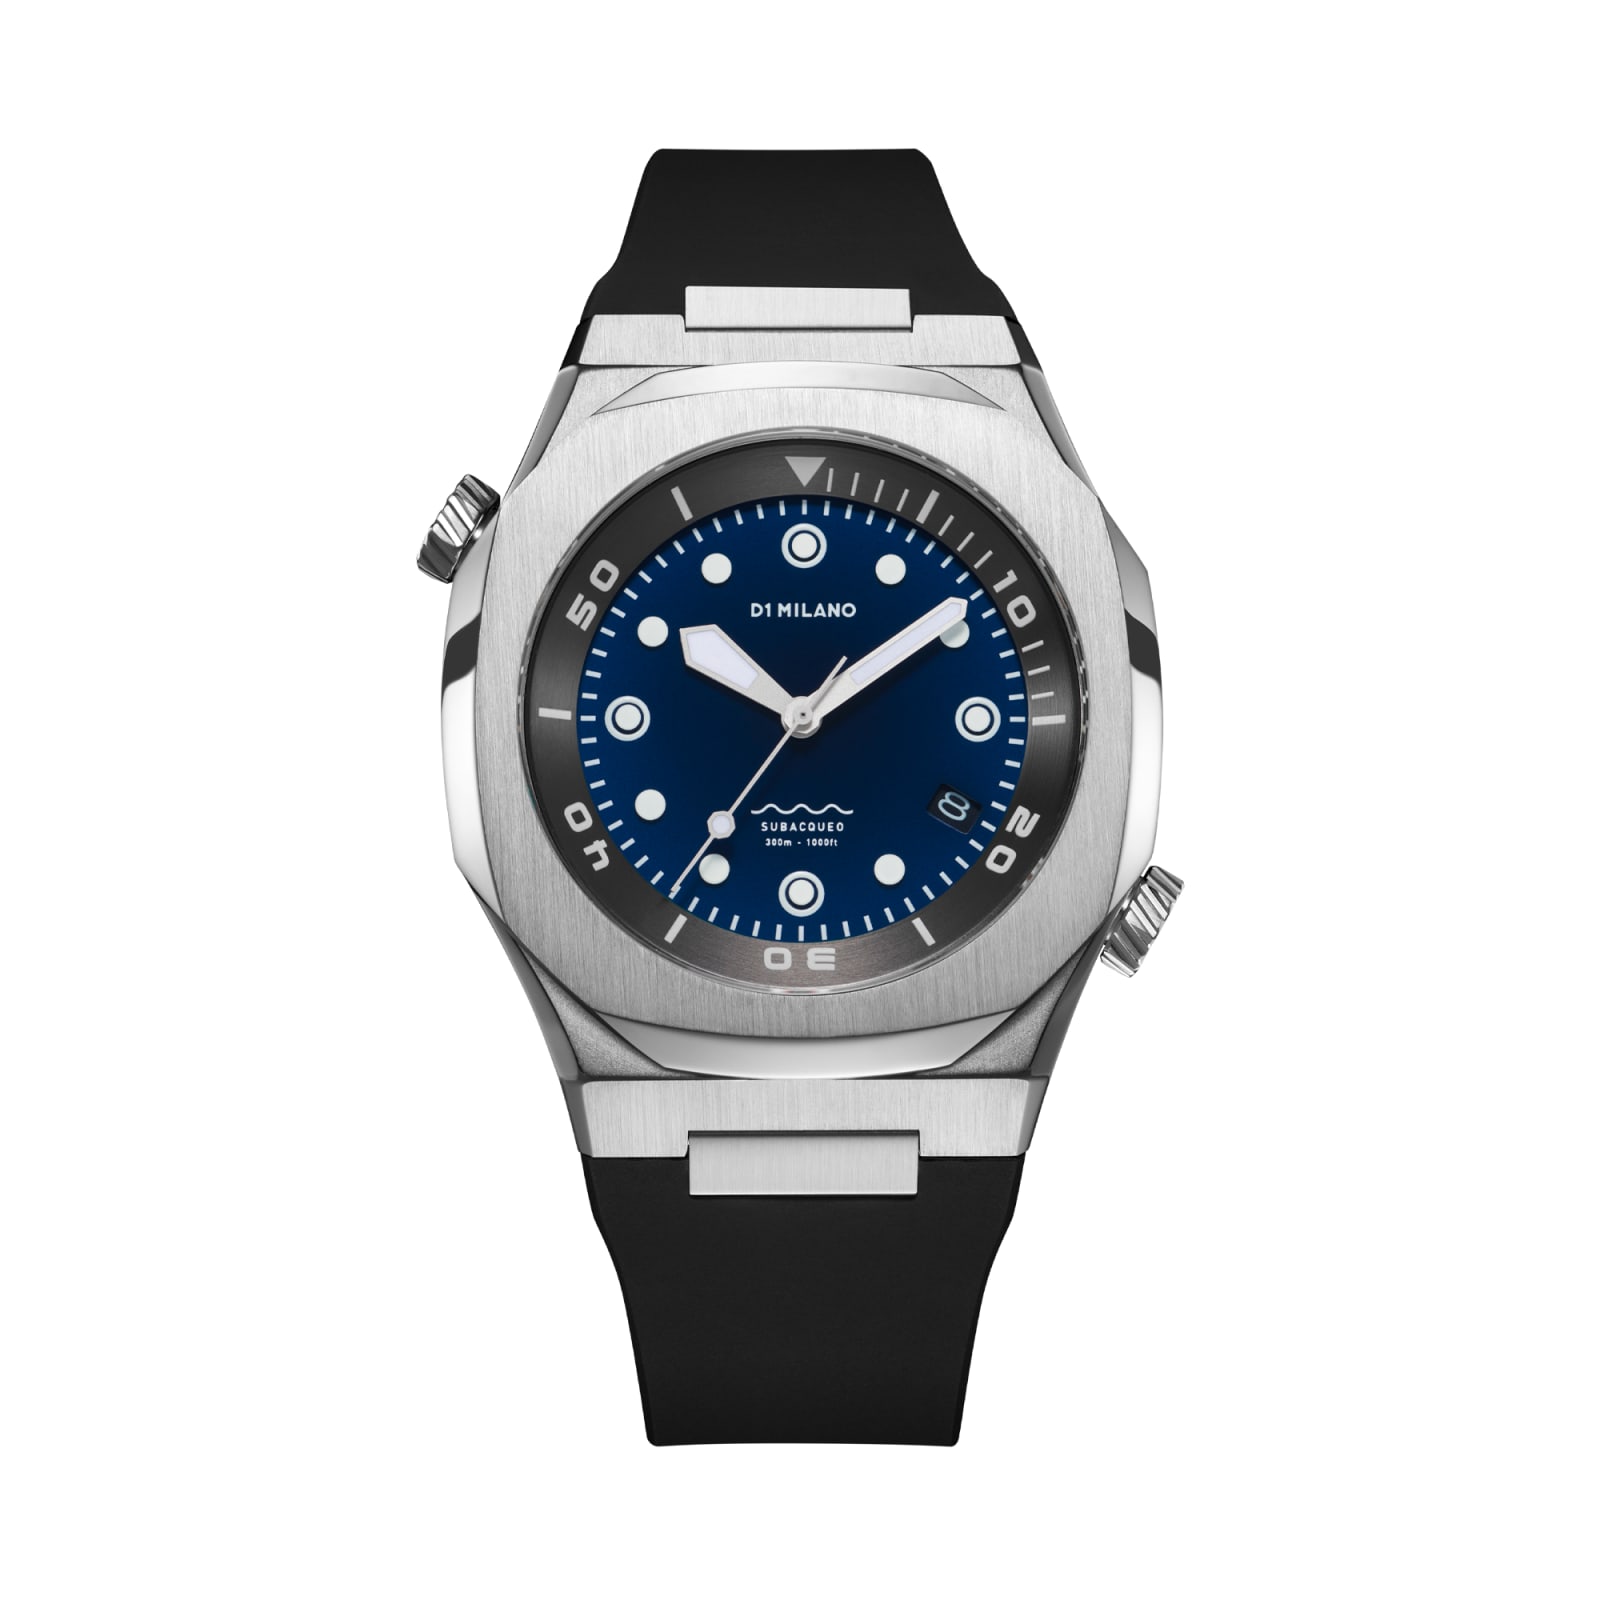 D1 Milano Deep Blue Watches